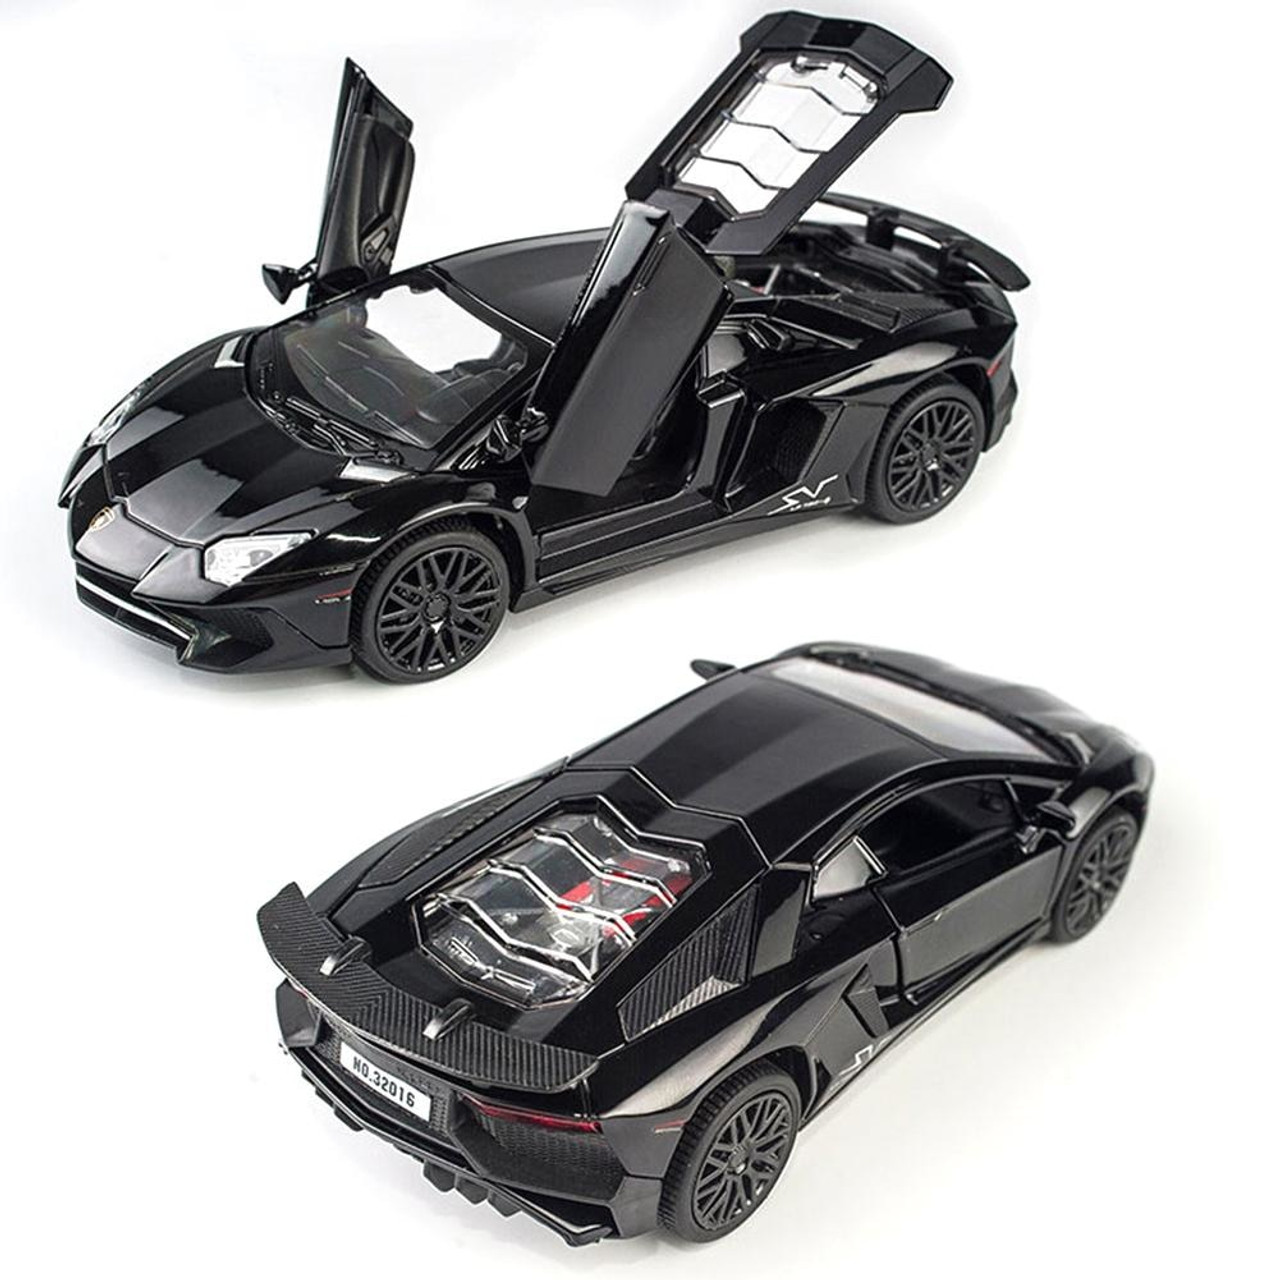 toy model vehicles